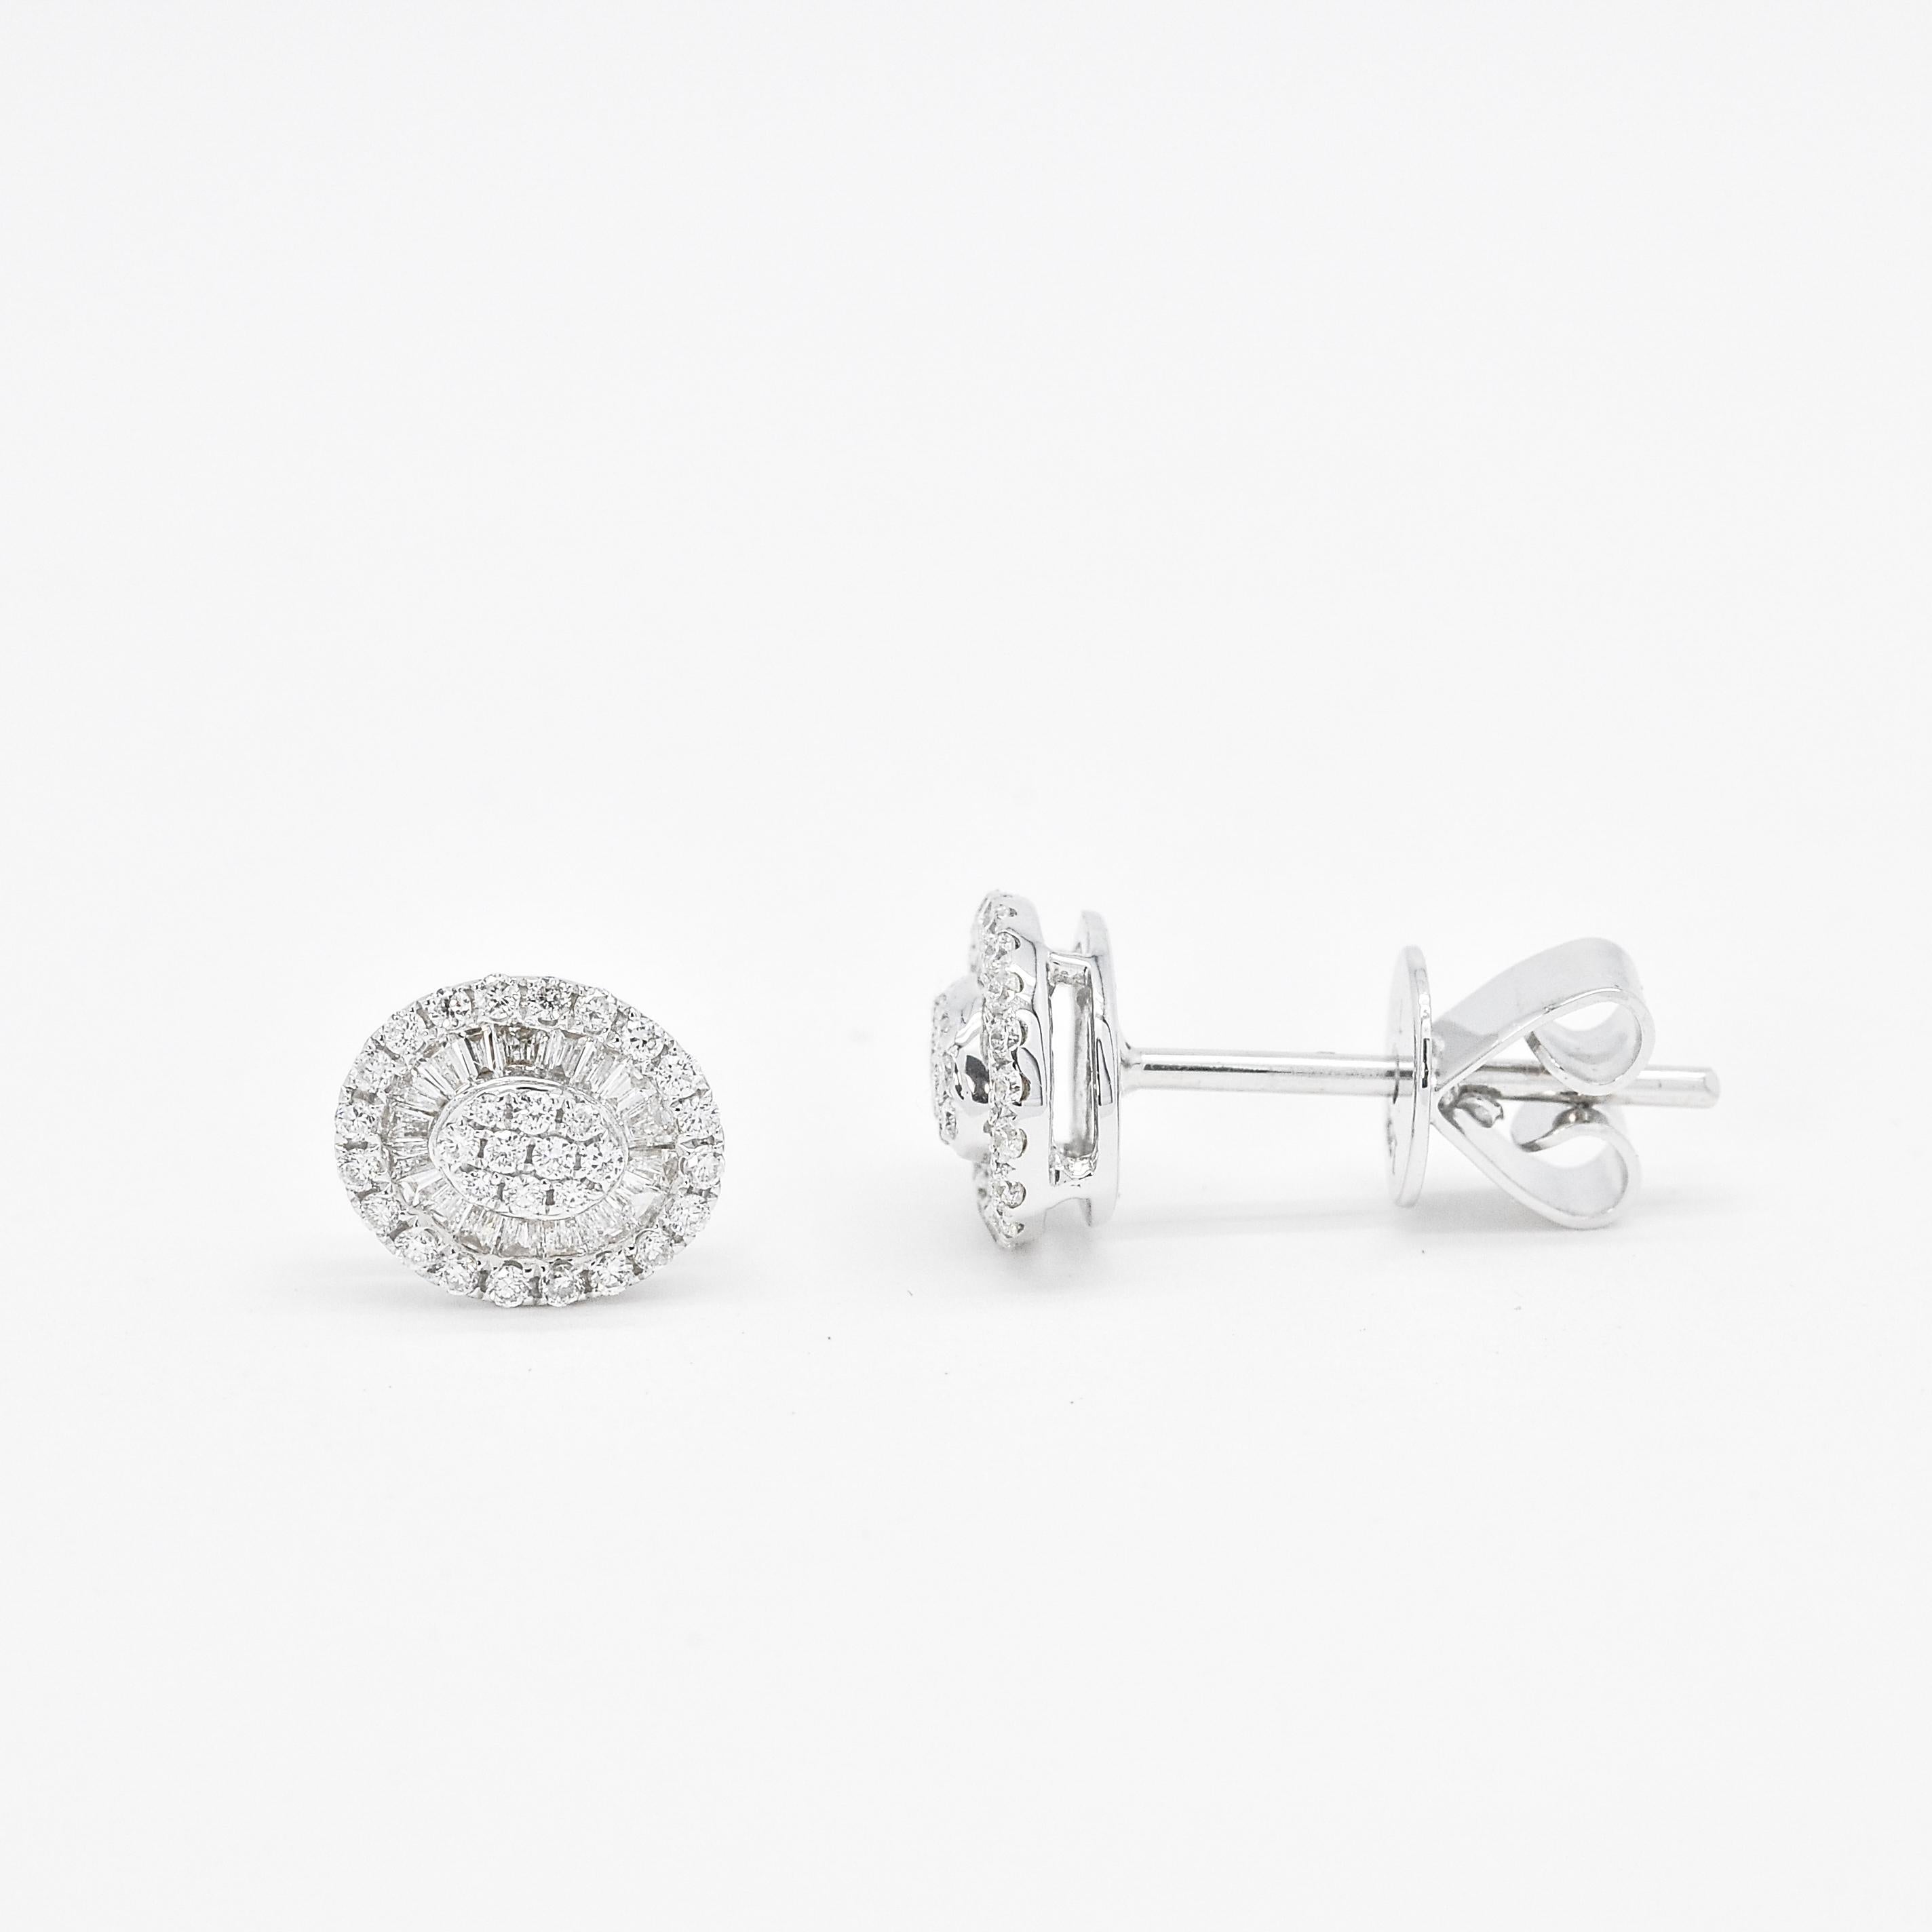 Baguette Cut Natural Diamond 0.35 carats 18KT White Gold Oval Shape Stud Earrings  For Sale